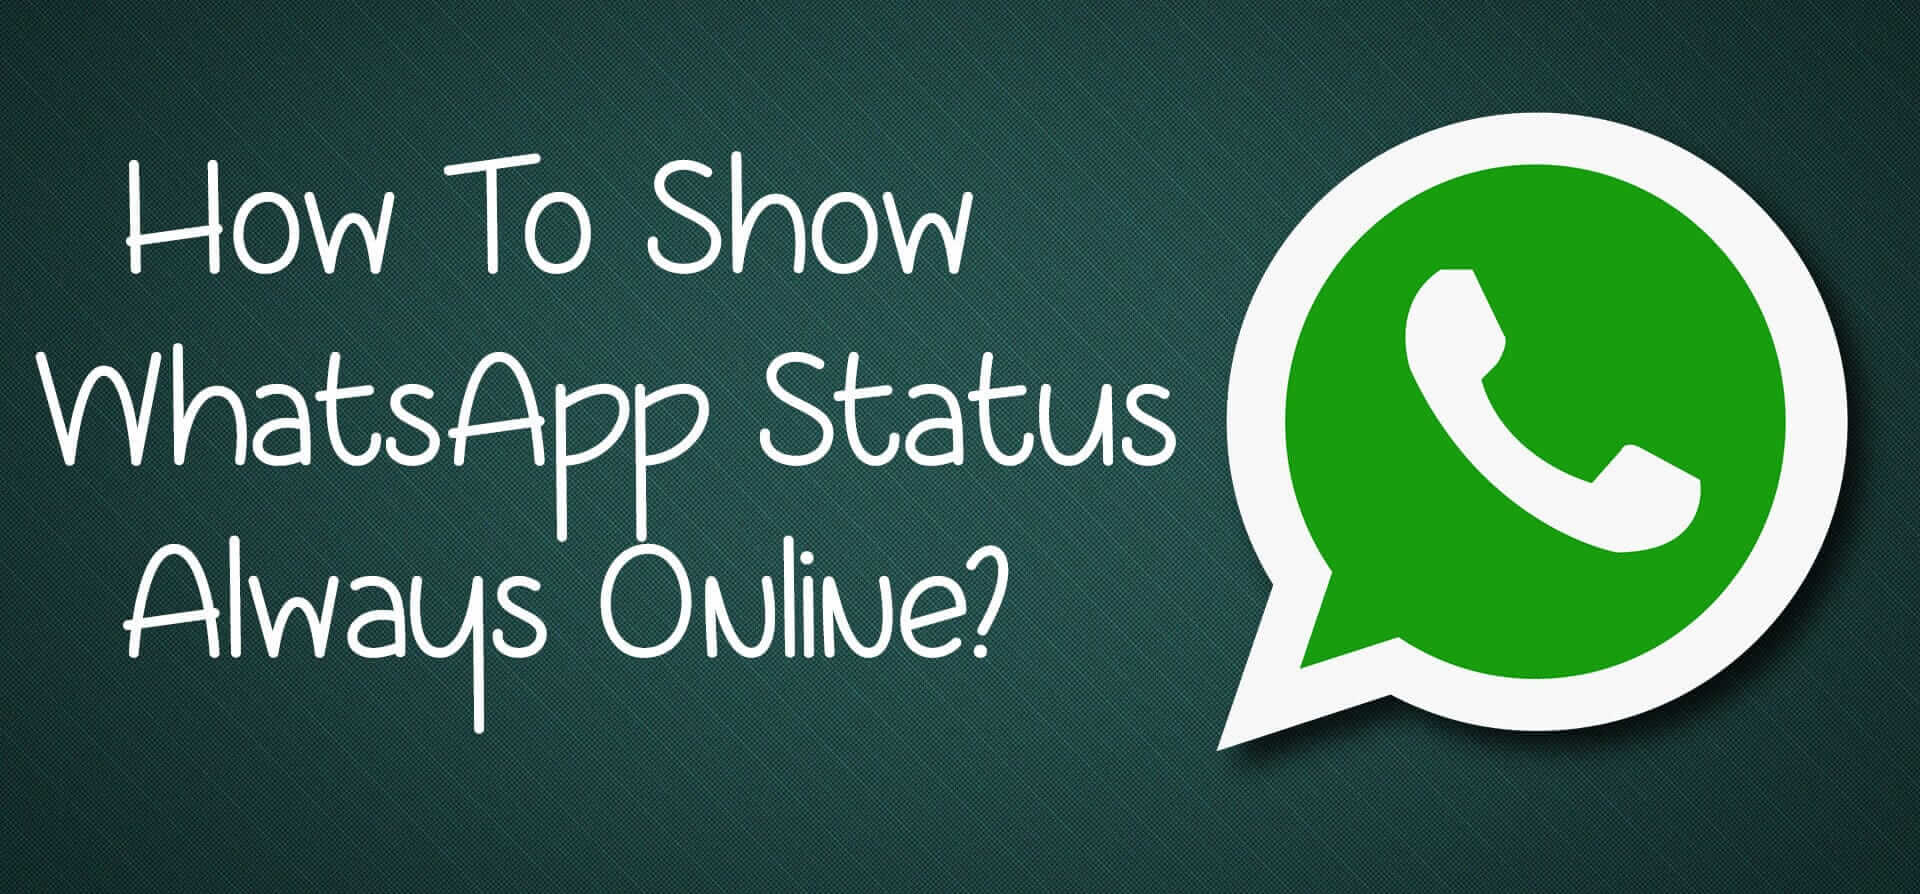 How To Show WhatsApp Status Always Online